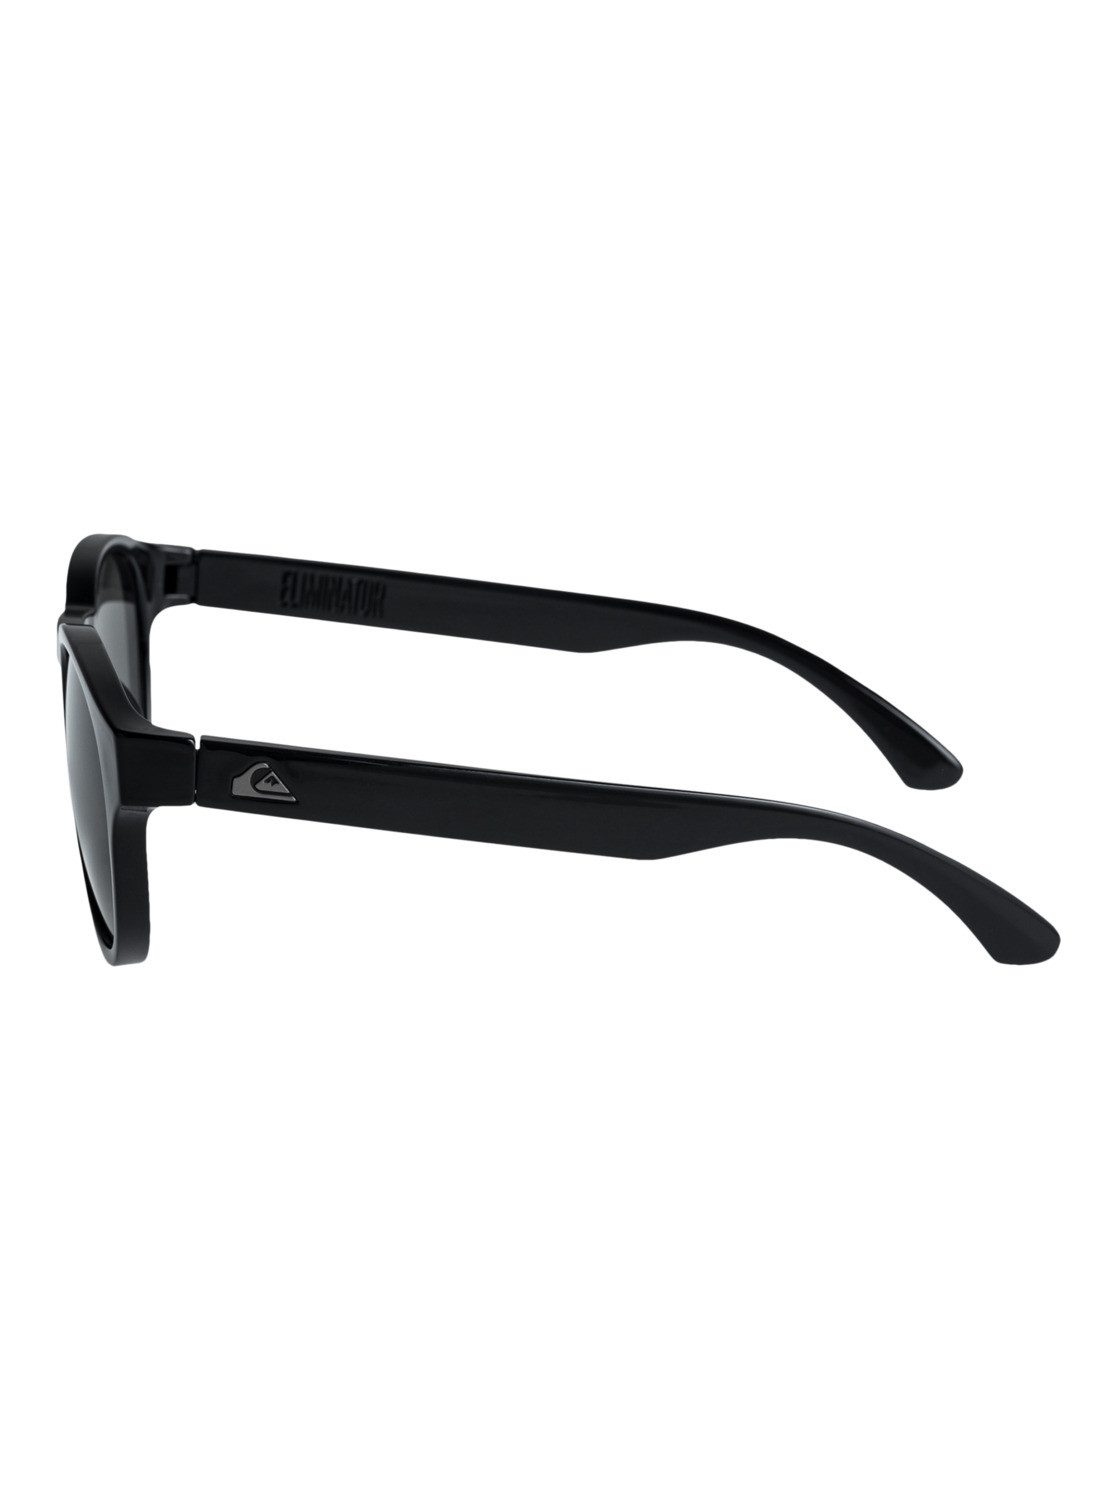 Eliminator Sonnenbrille Quiksilver Black/Grey